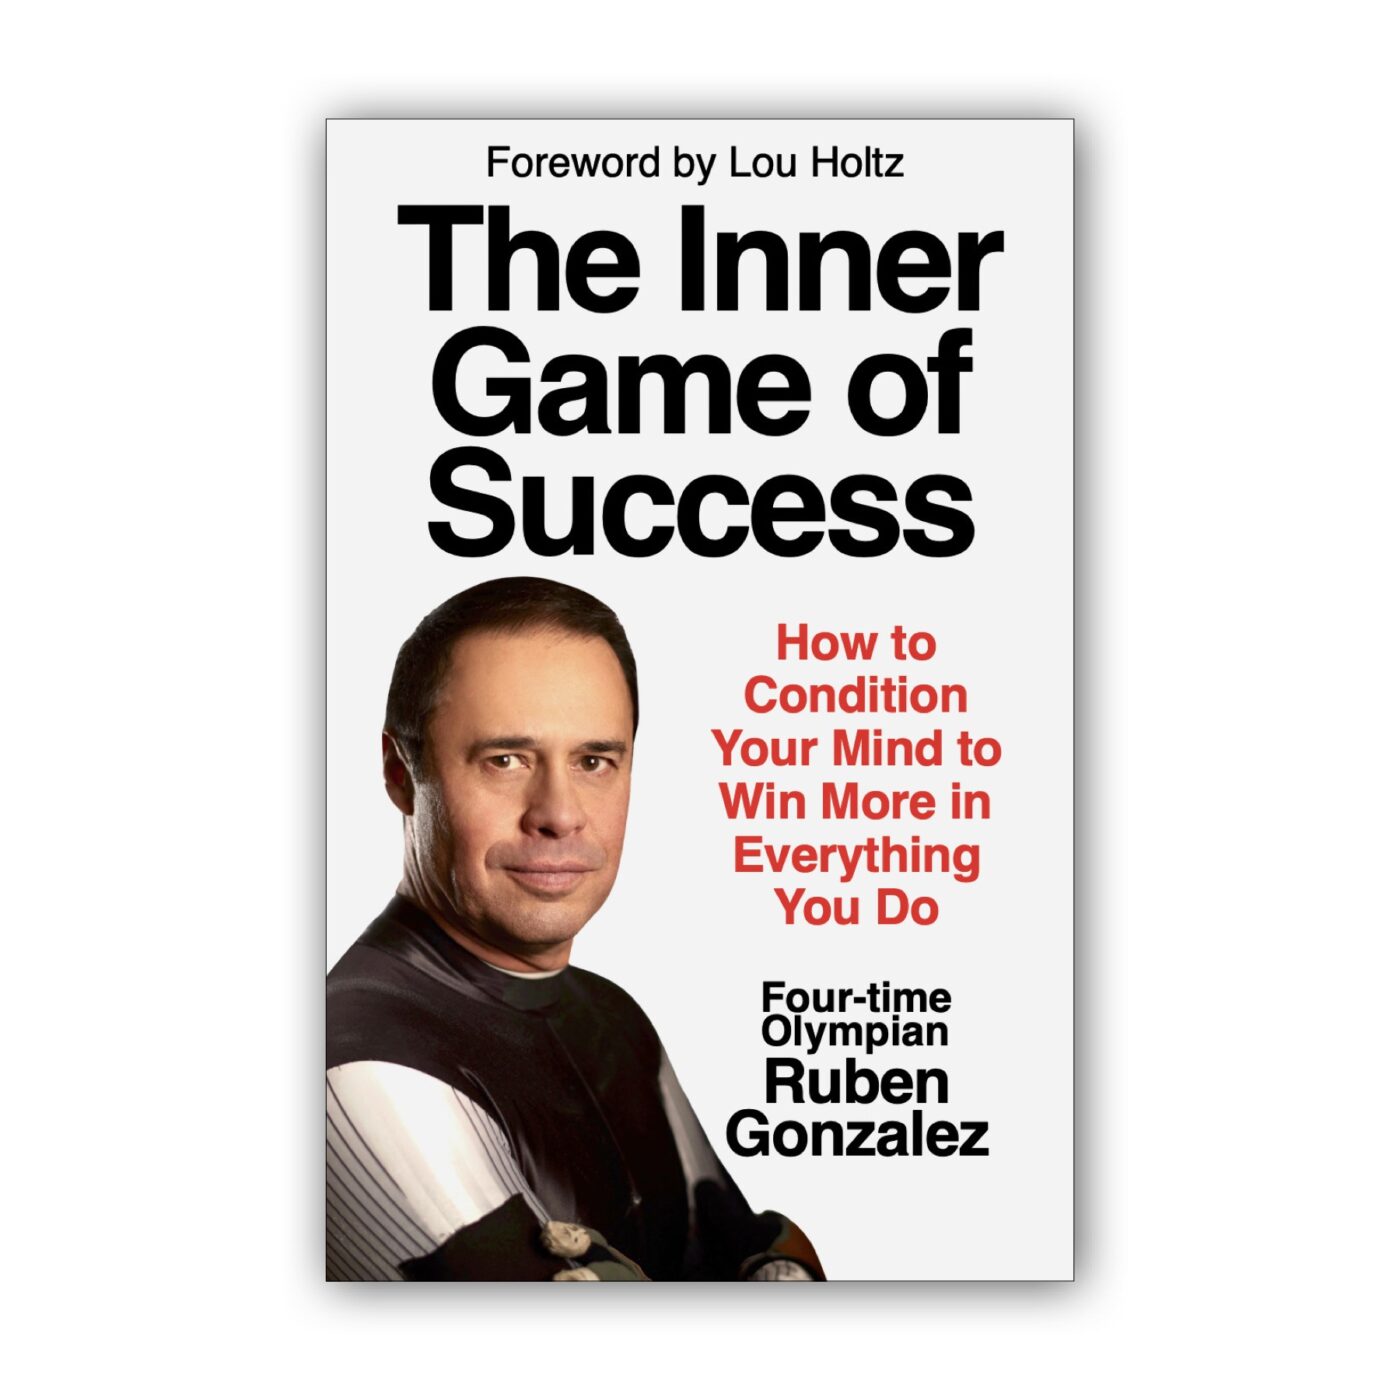 New York motivational keynote speaker Ruben Gonzalez is a bestselling author